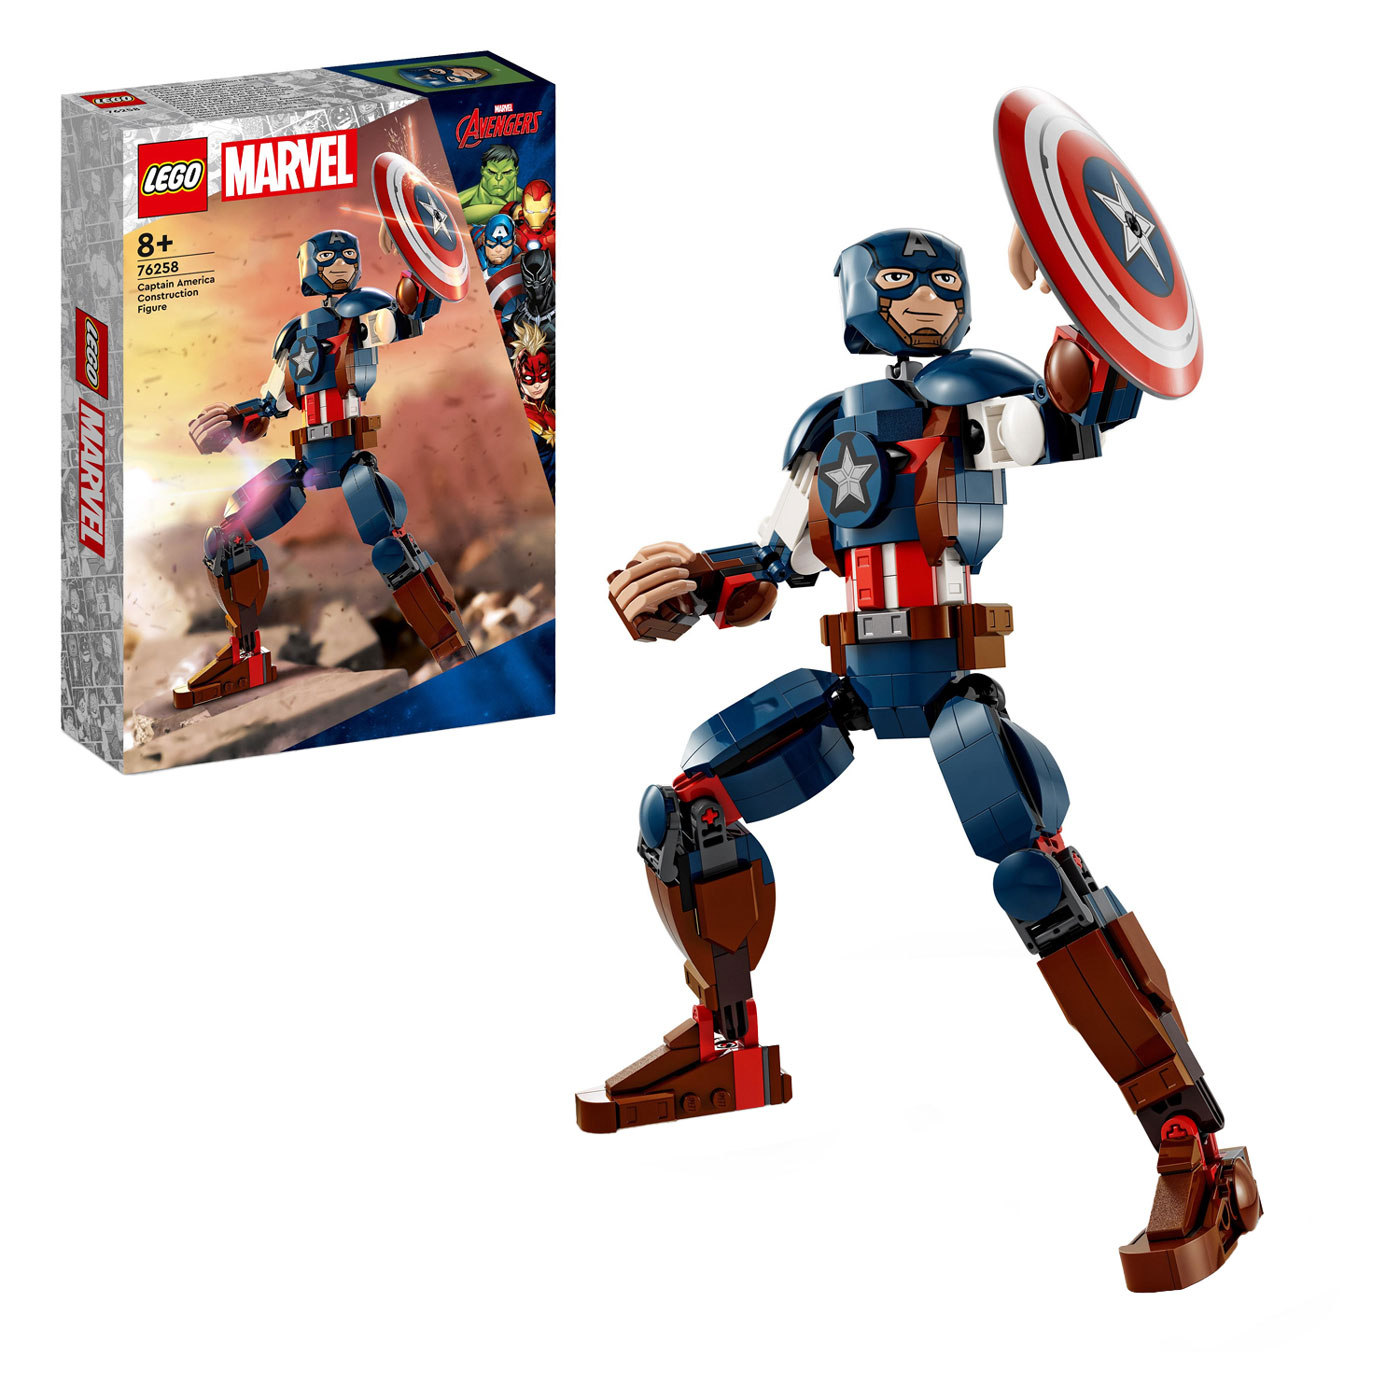 Disney Store Exclusive - Marvel Toy Box Captain Marvel, Wolverine